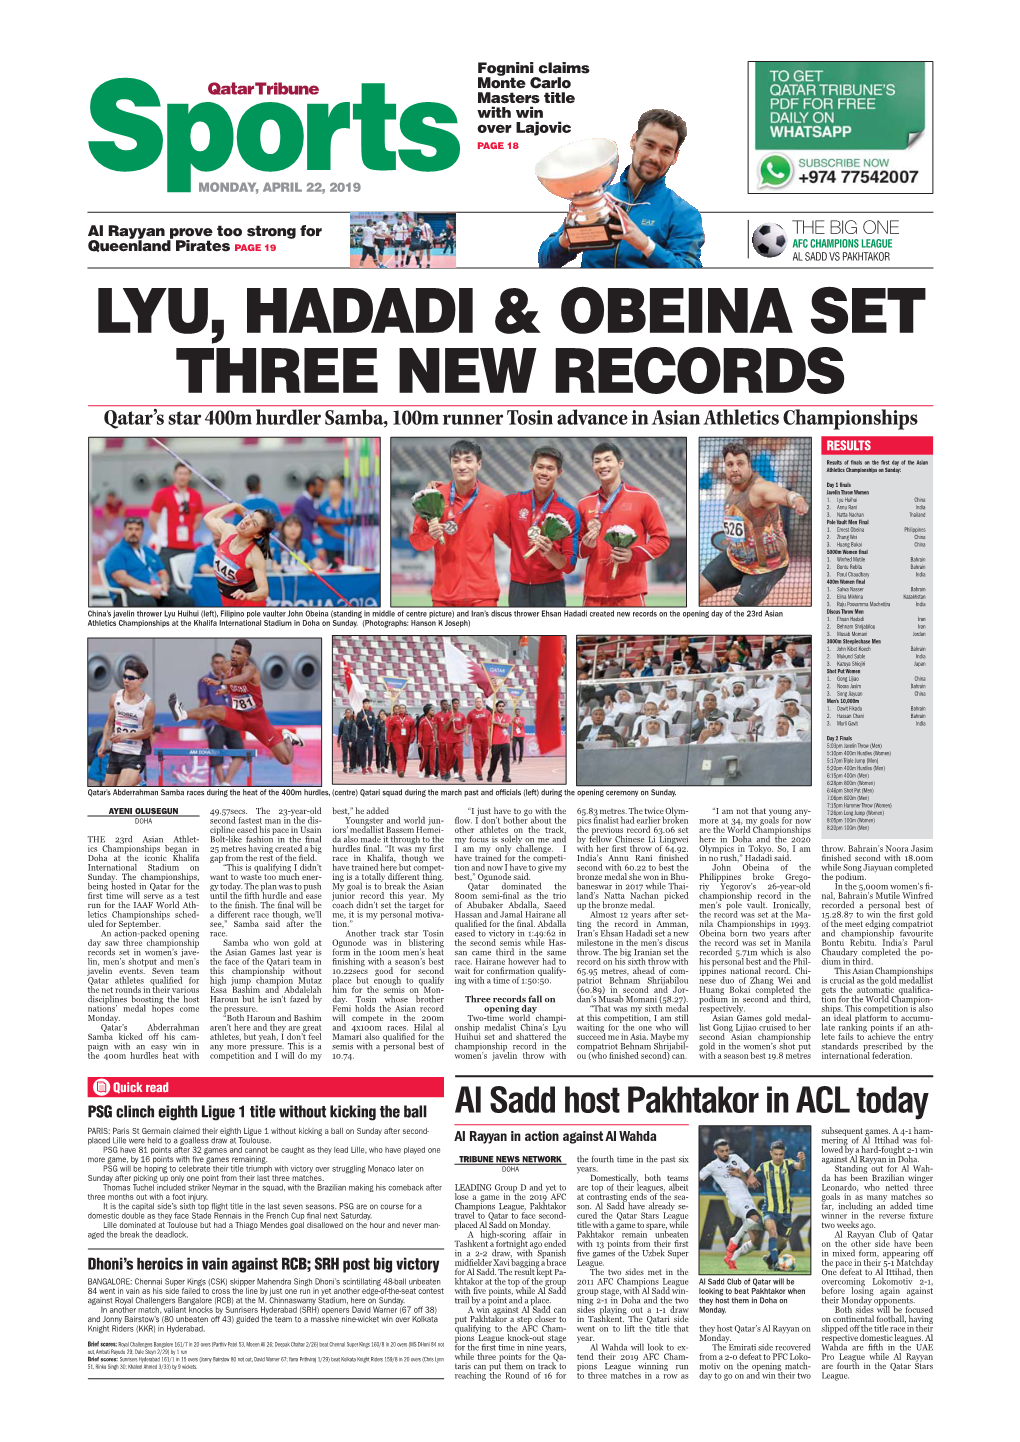 Lyu, Hadadi & Obeina Set Three New Records